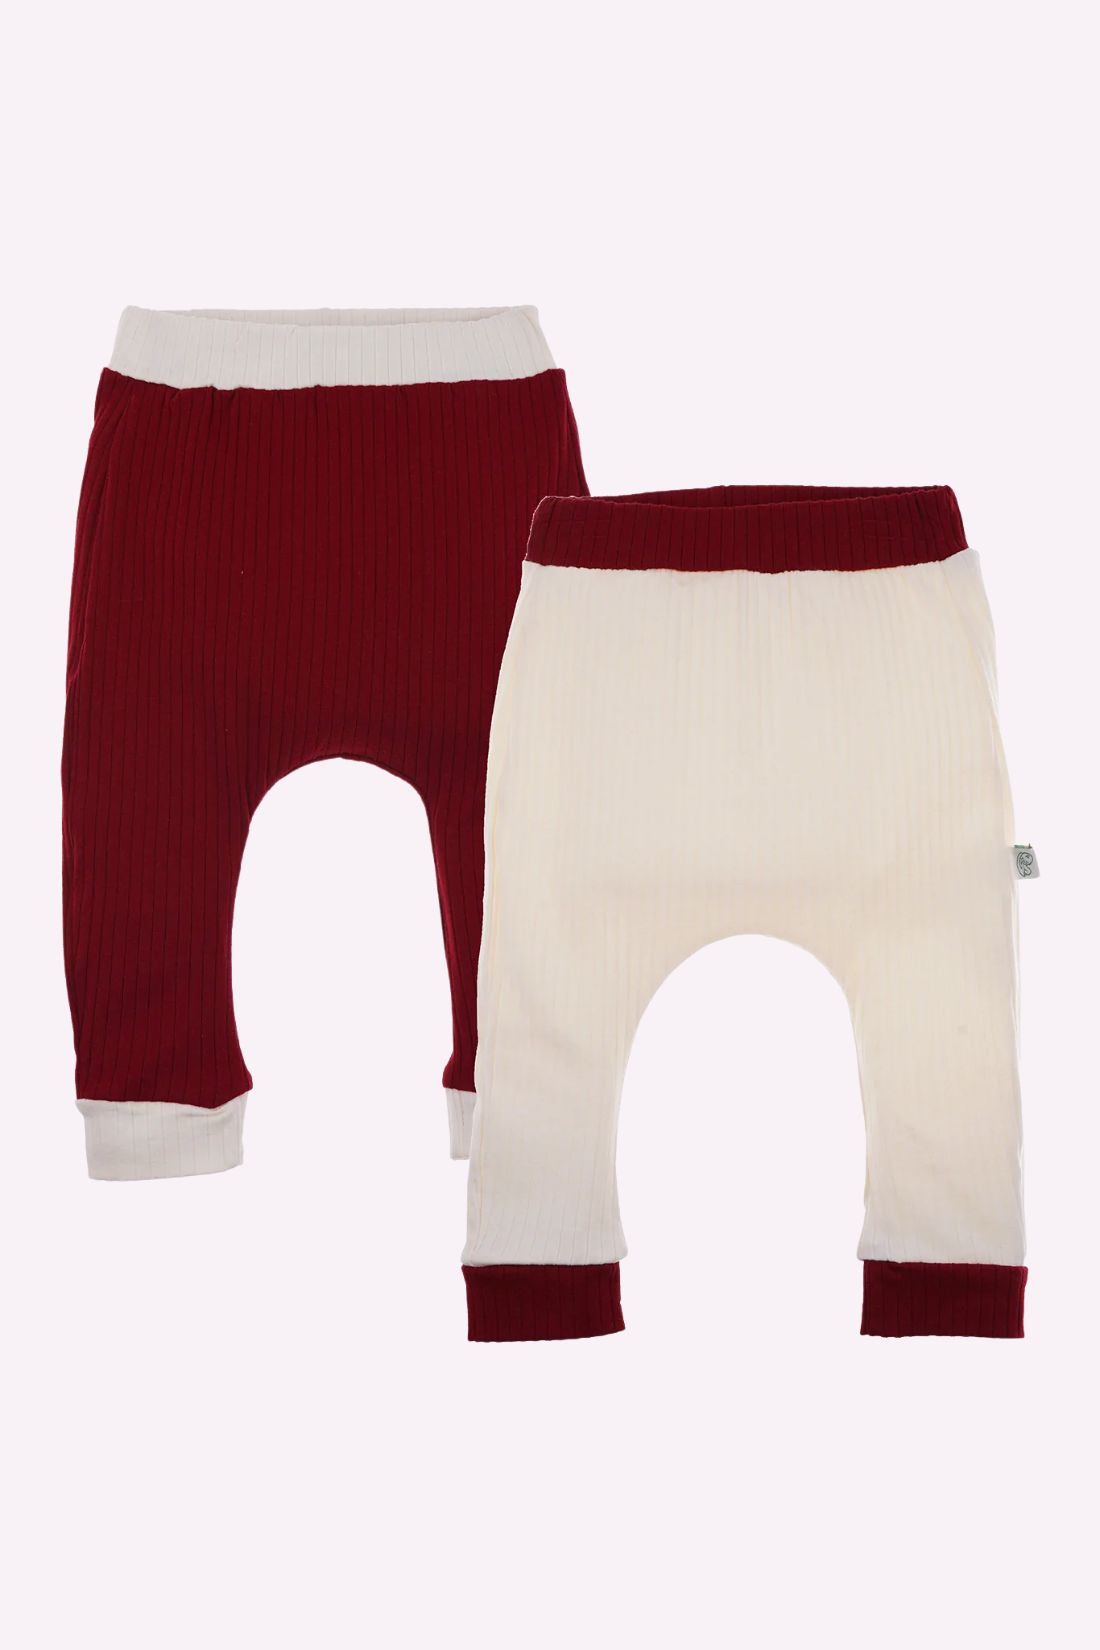 Babycosy Organic Pants Set of 2 (Creamy White & Red)